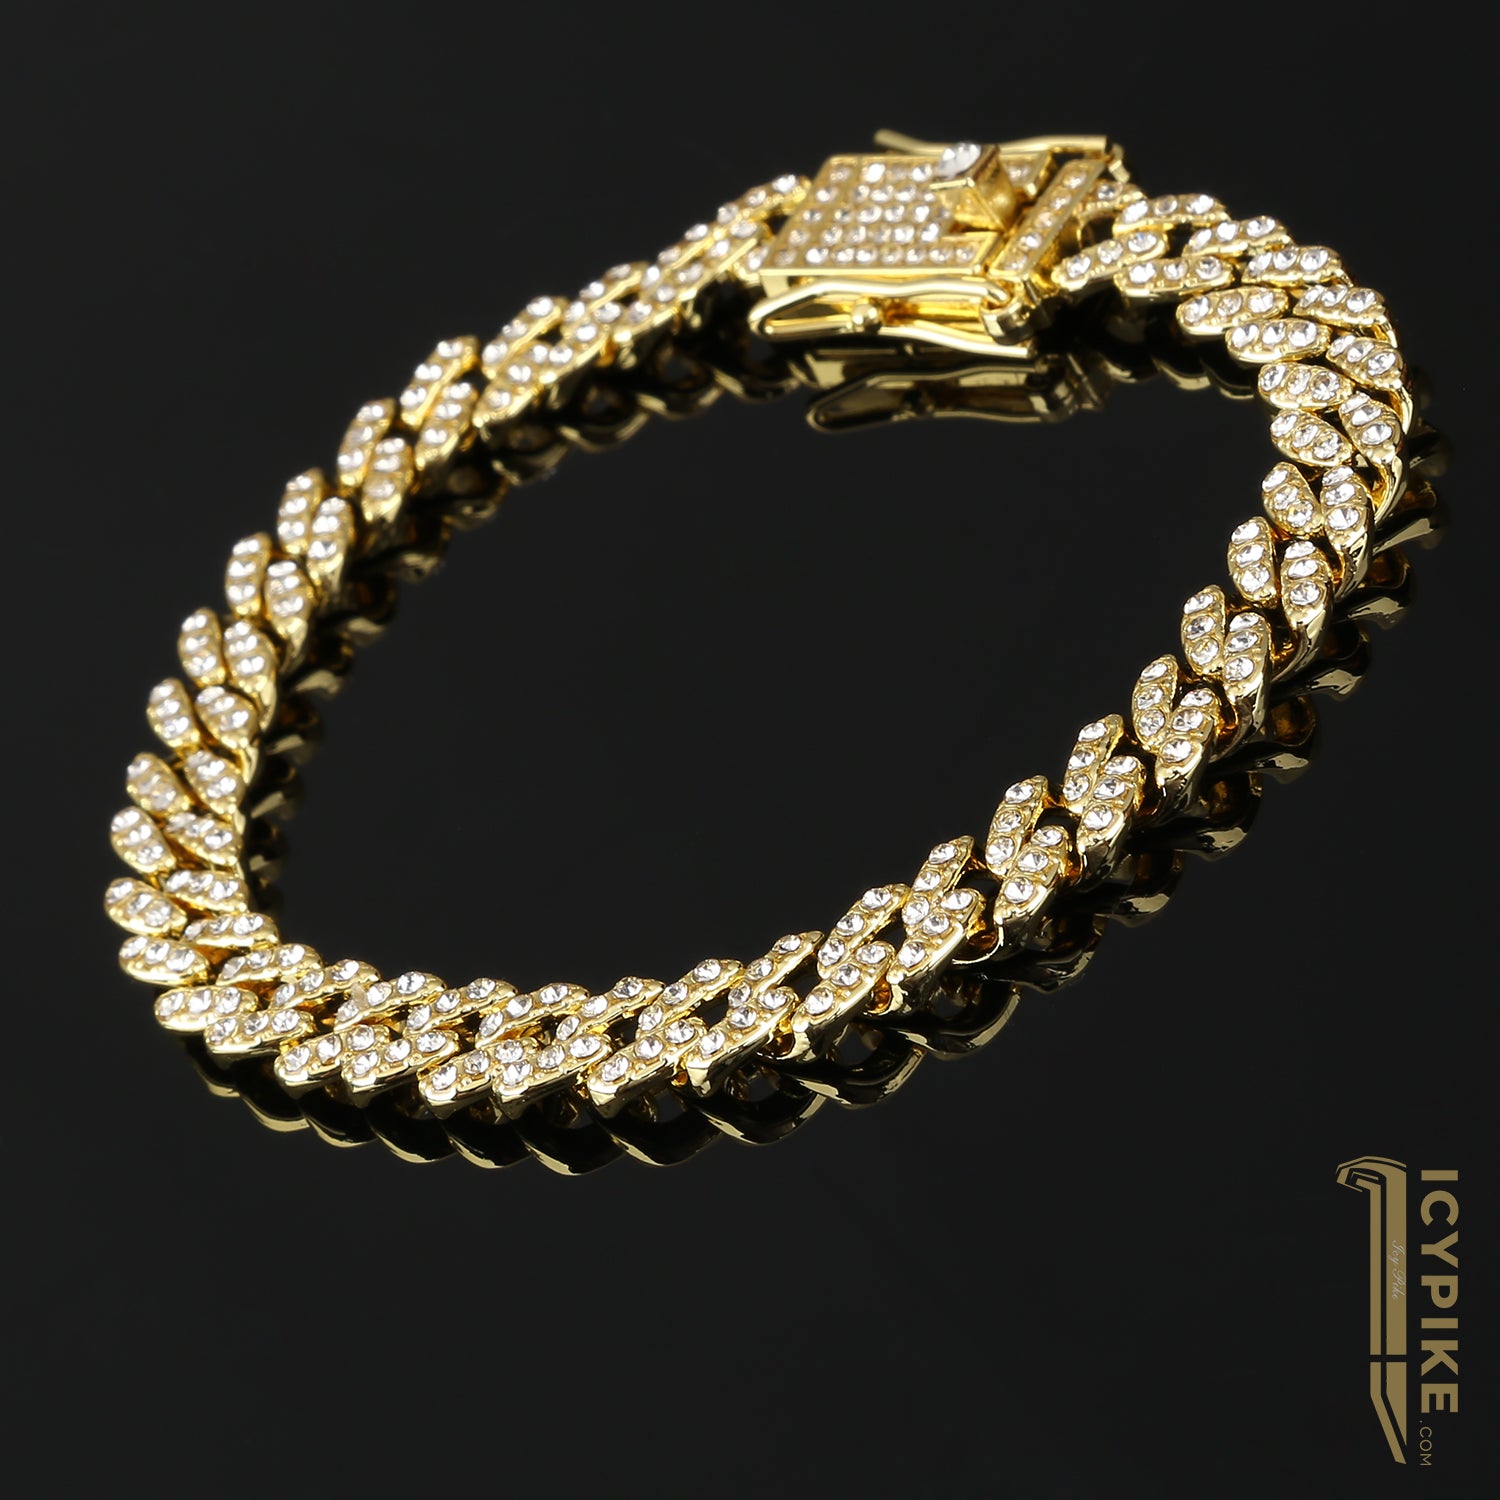 6mm Gold Plated Cuban Link Bracelet - {{ cuban link}} Bracelet